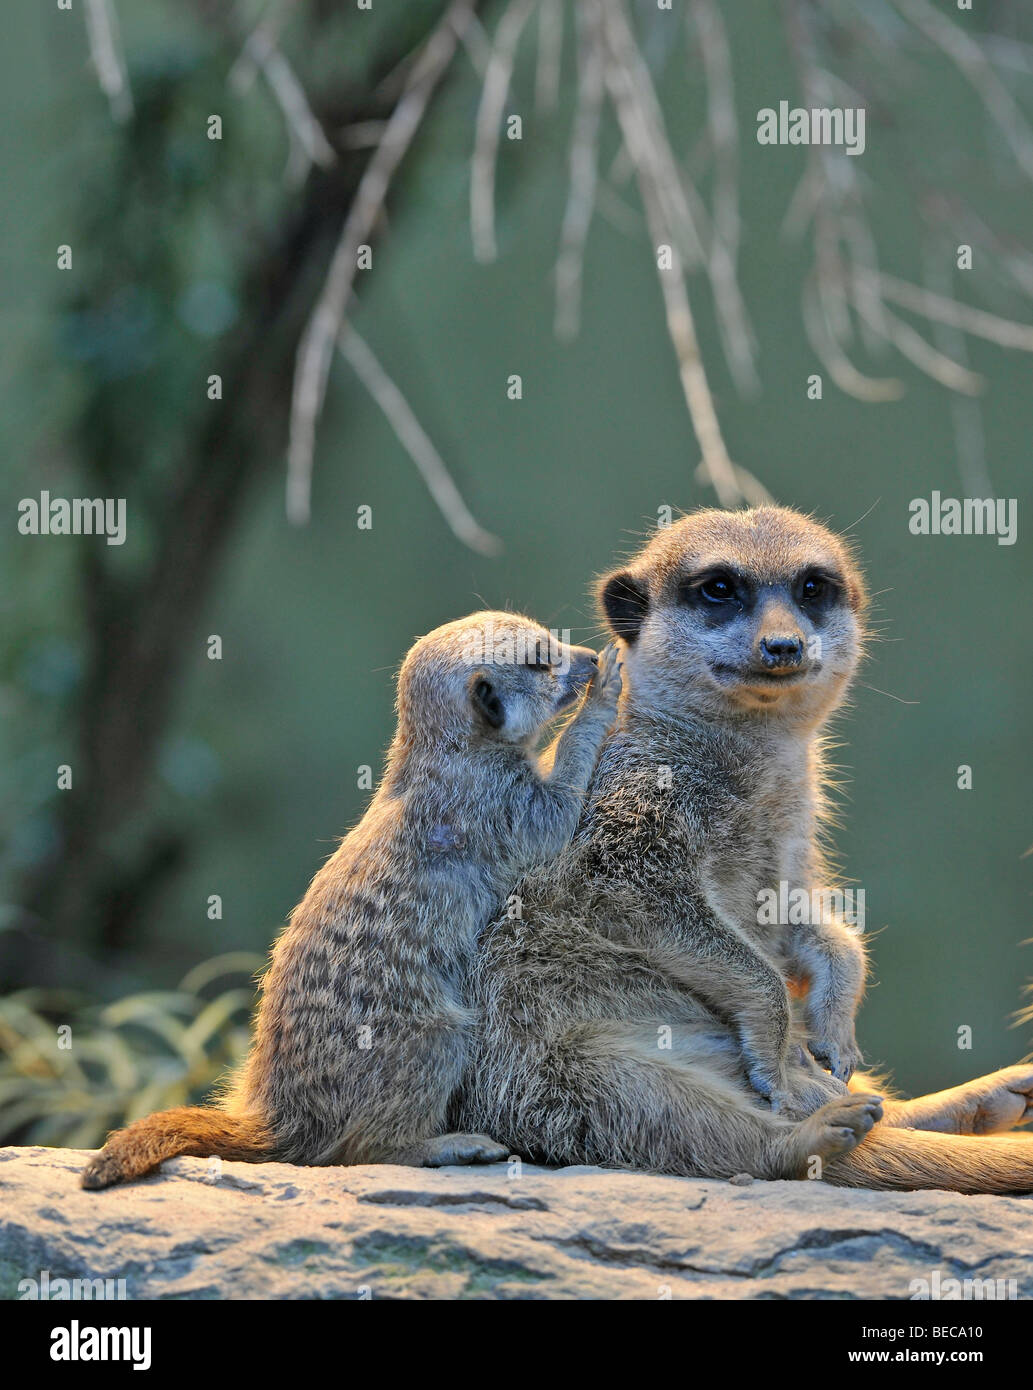 Meerkats (Suricata Suricatta), young animal, symbolic picture for communication Stock Photo